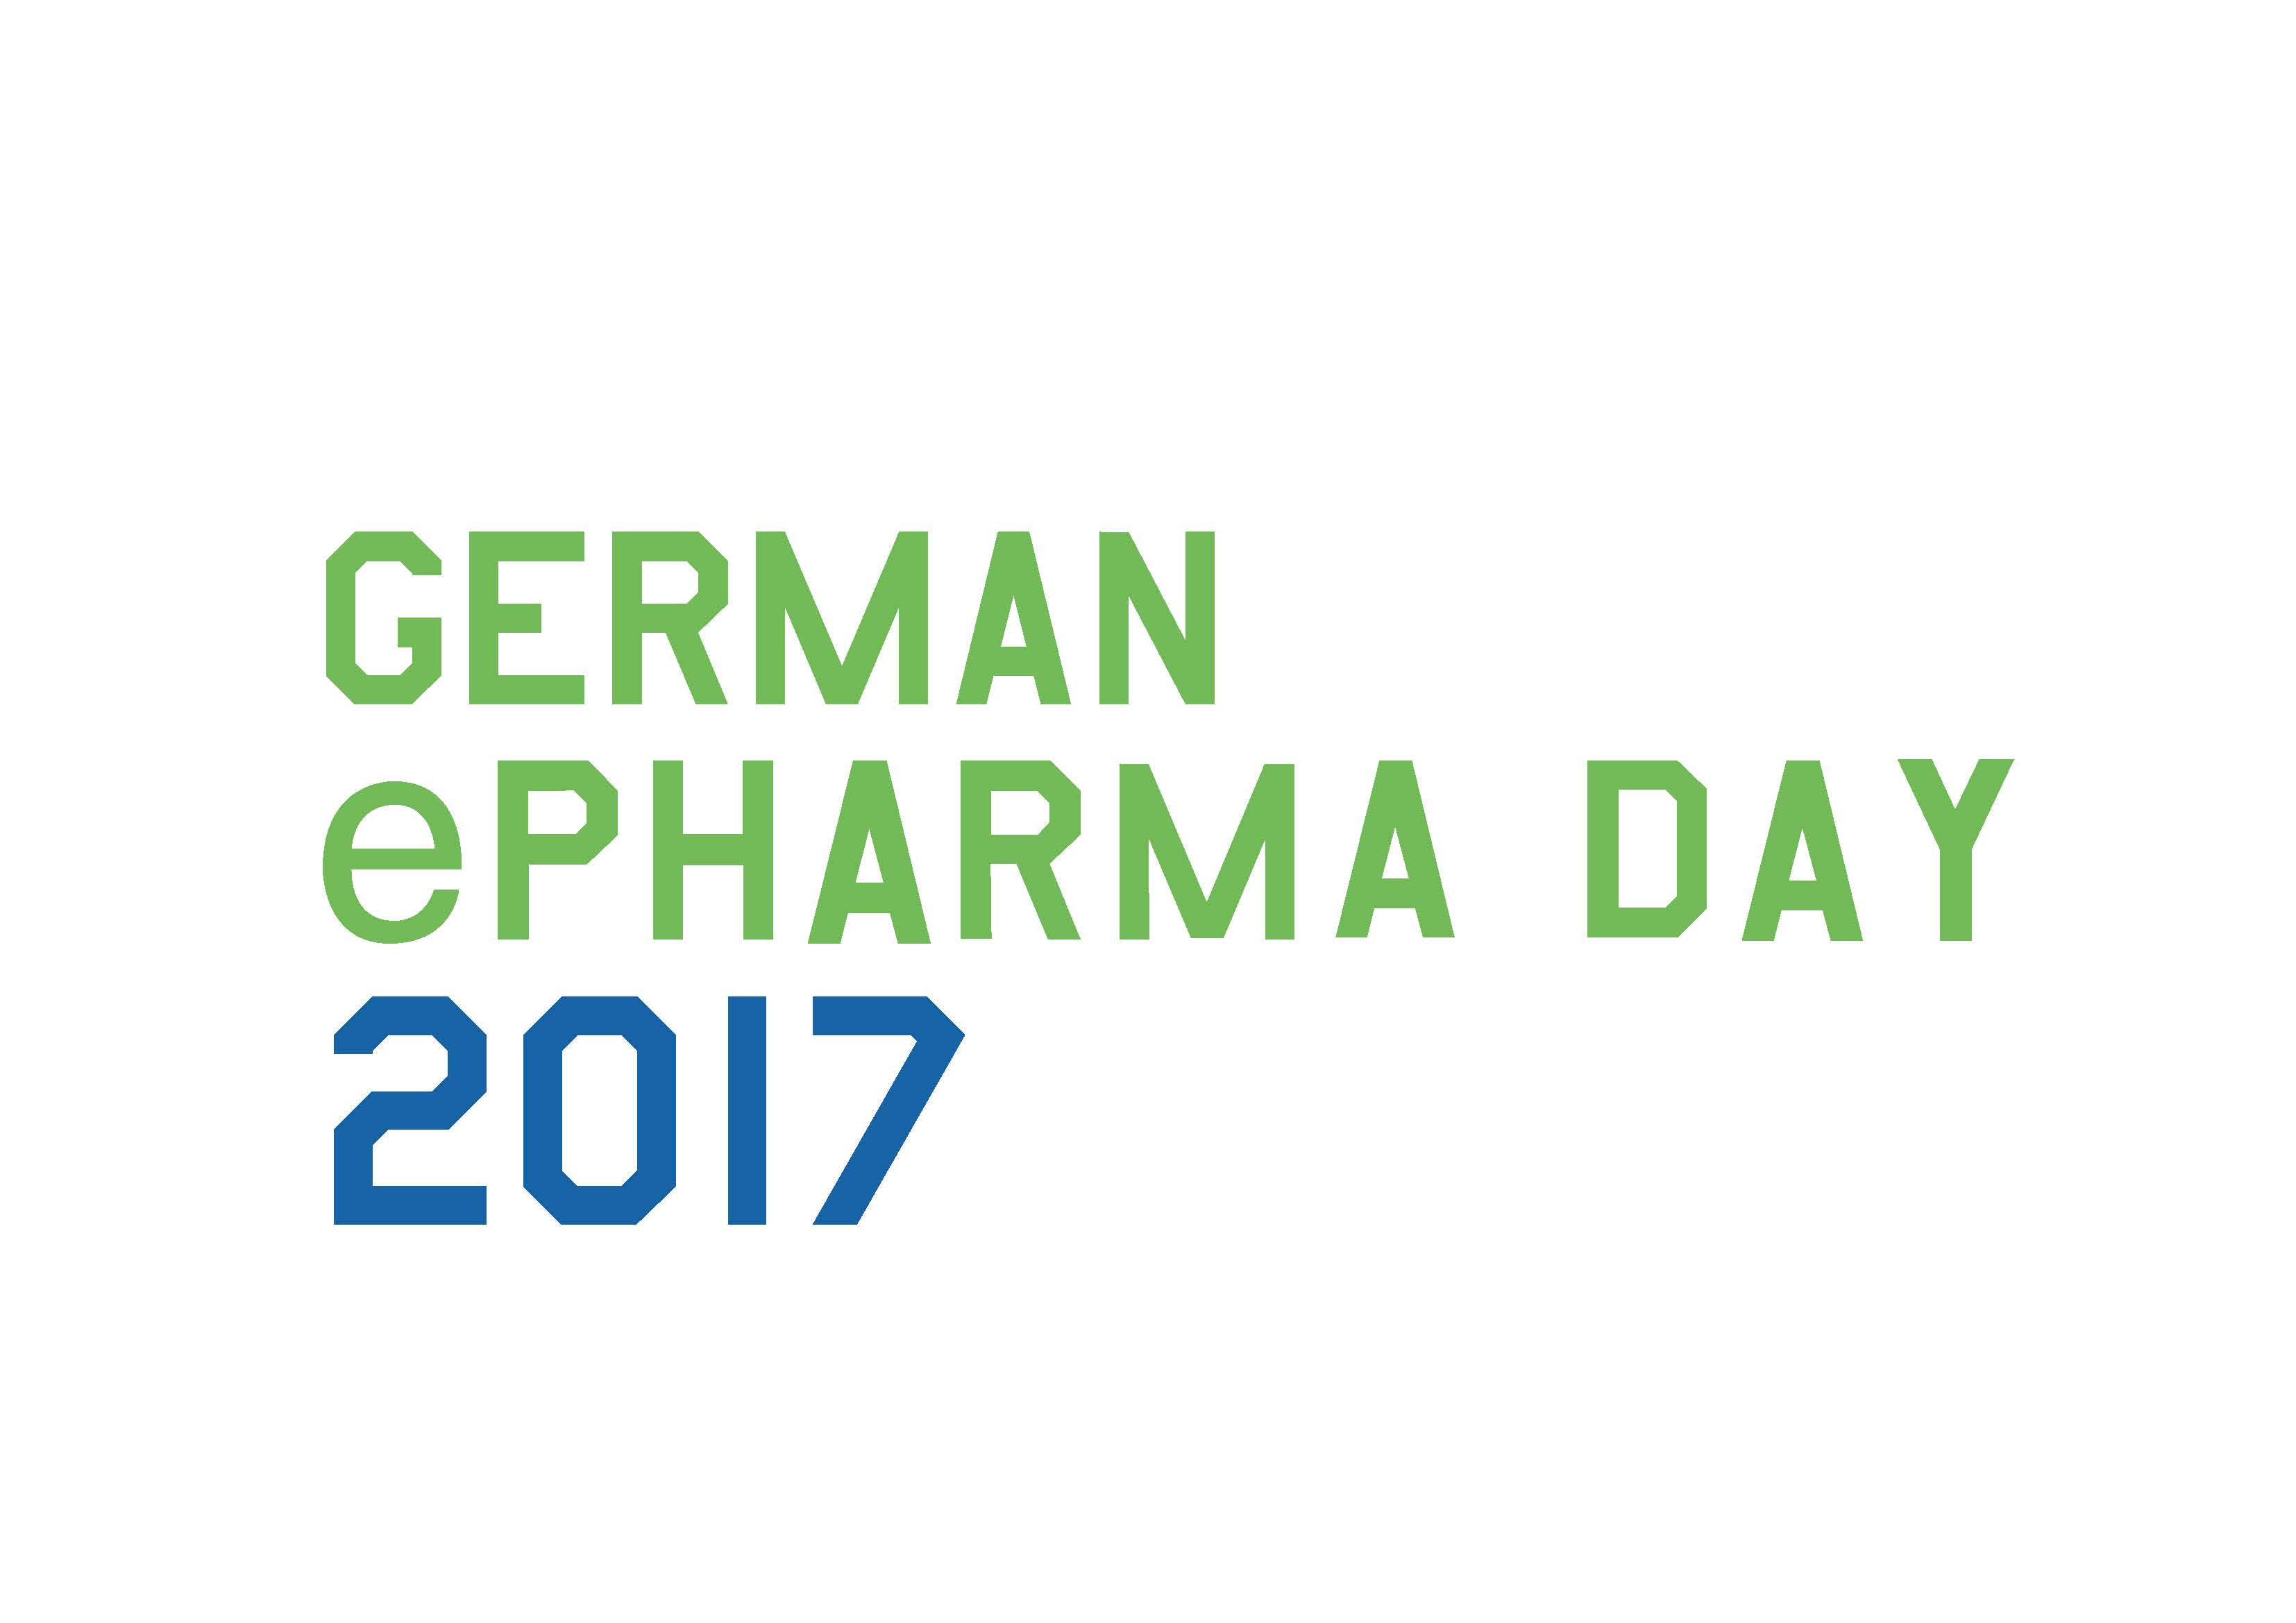 German ePharma Day